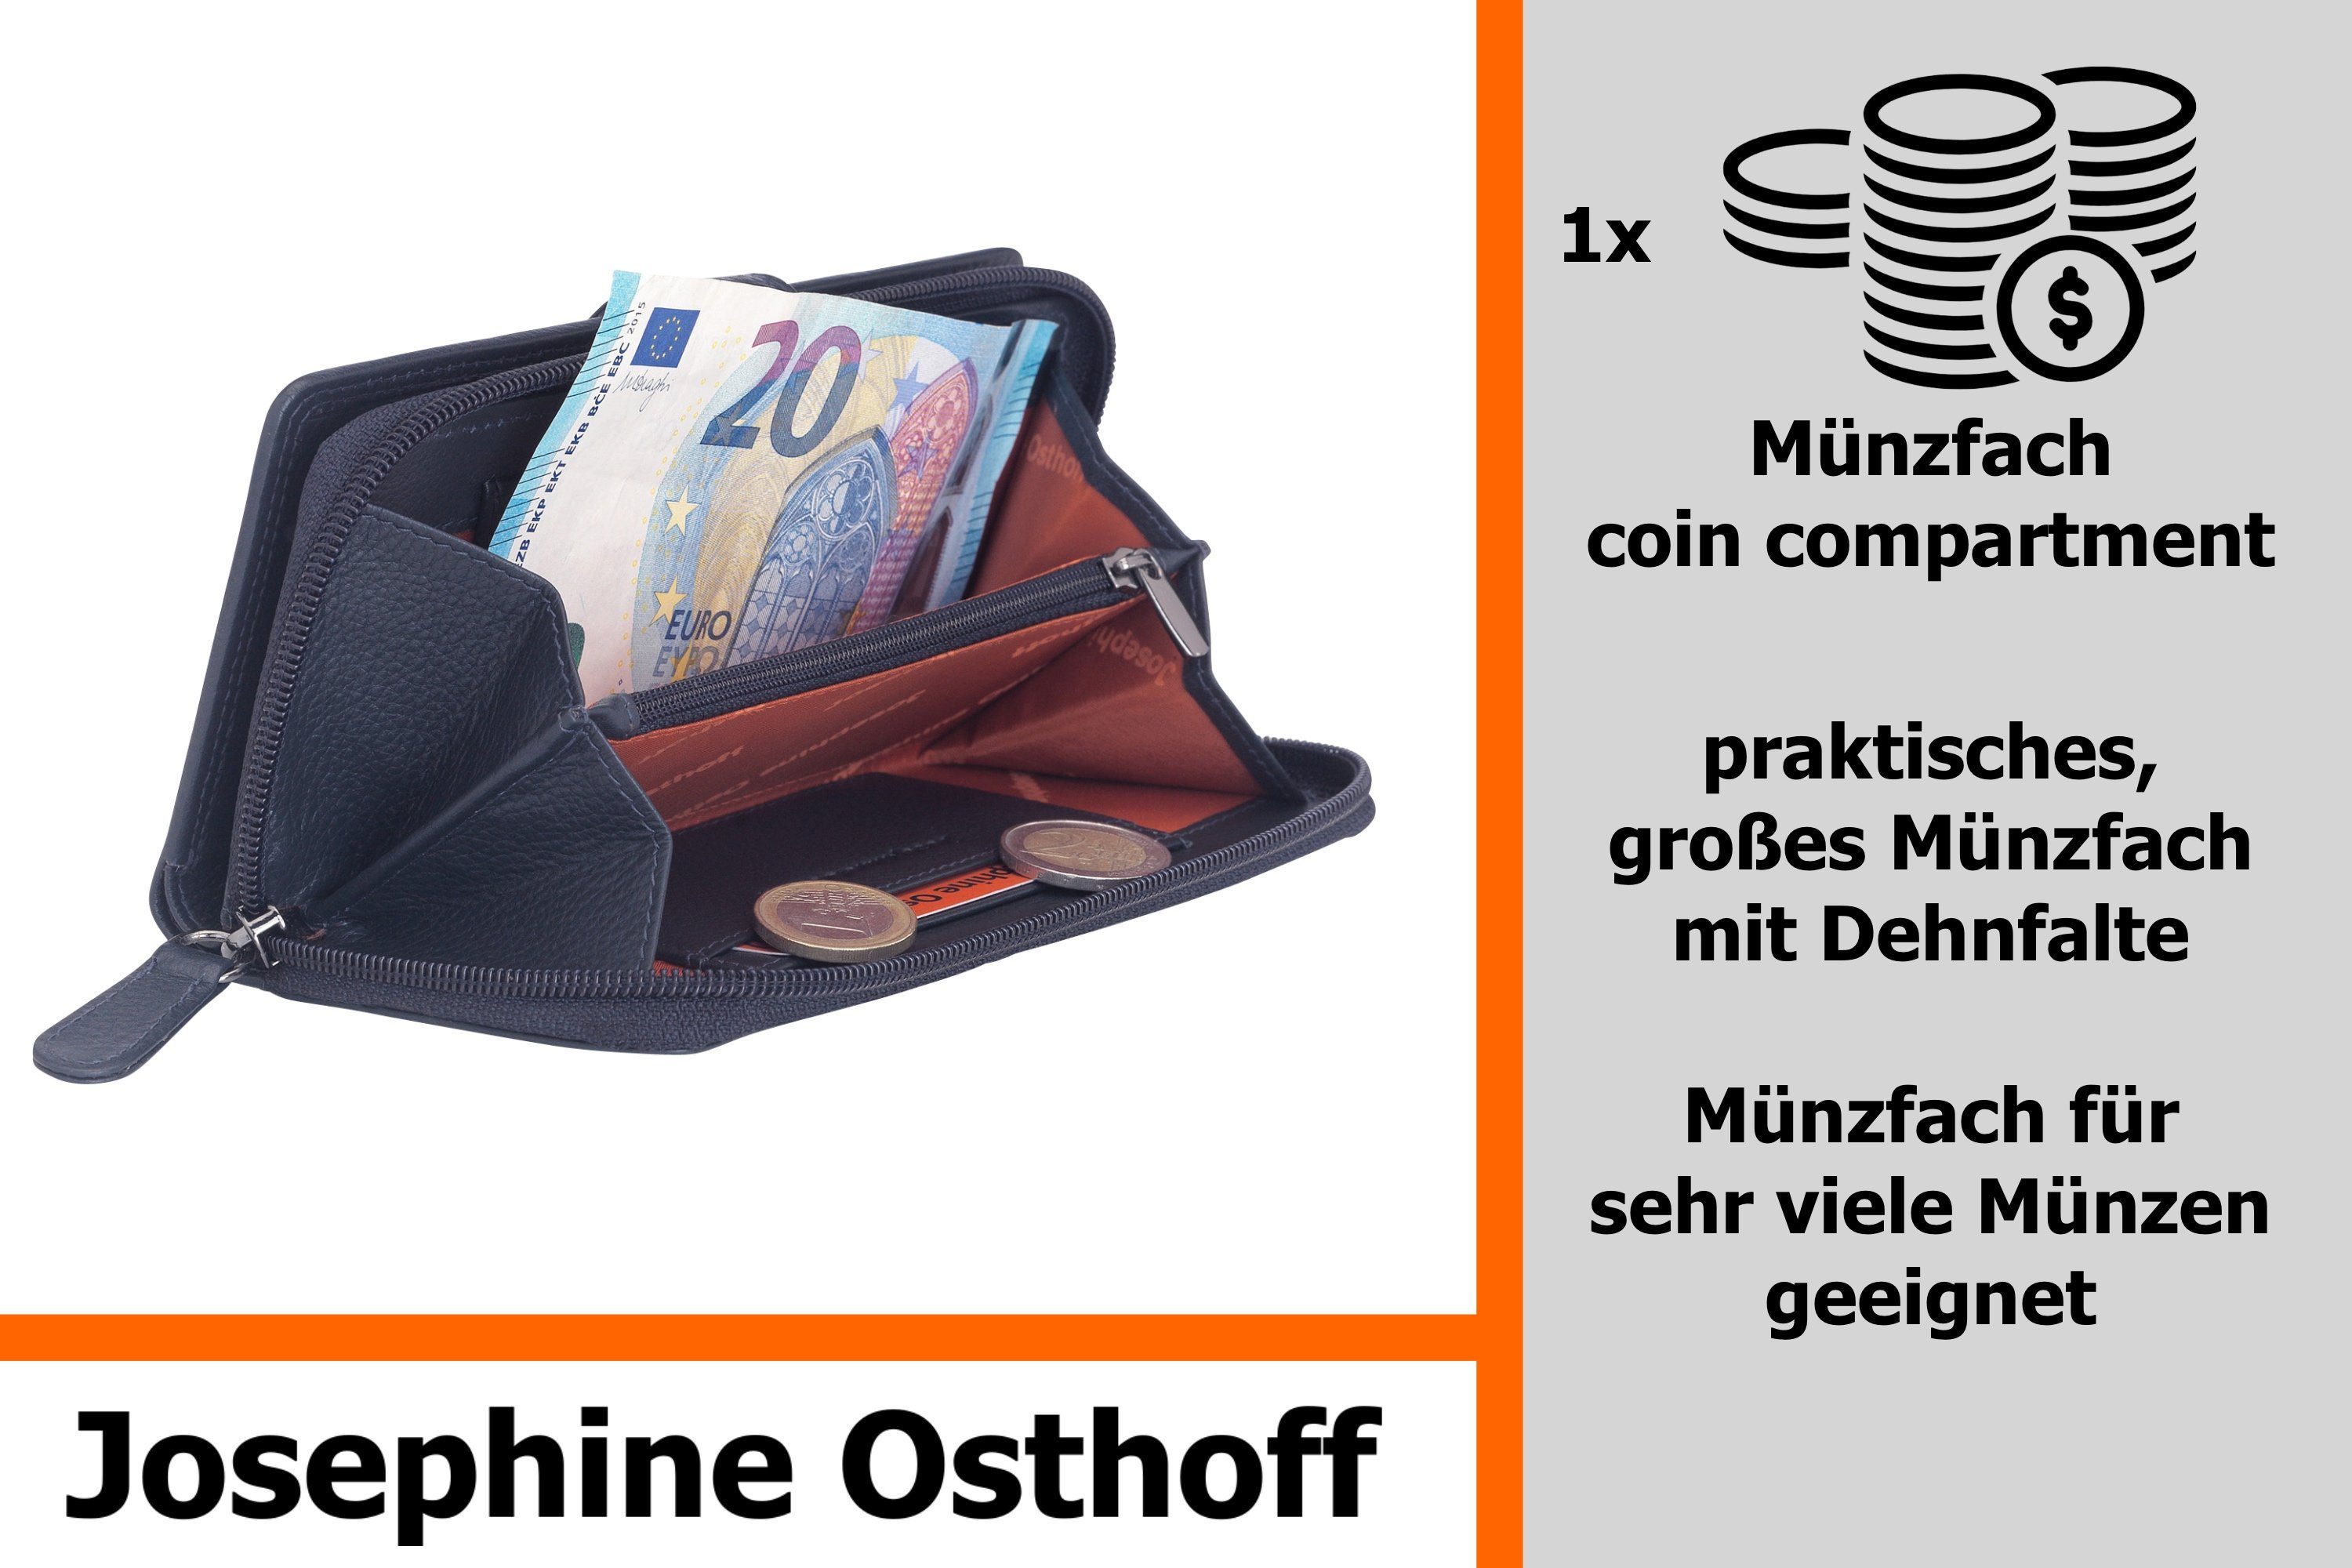 Josephine Osthoff Geldbörse Bremen marine Geldbörse kompakt